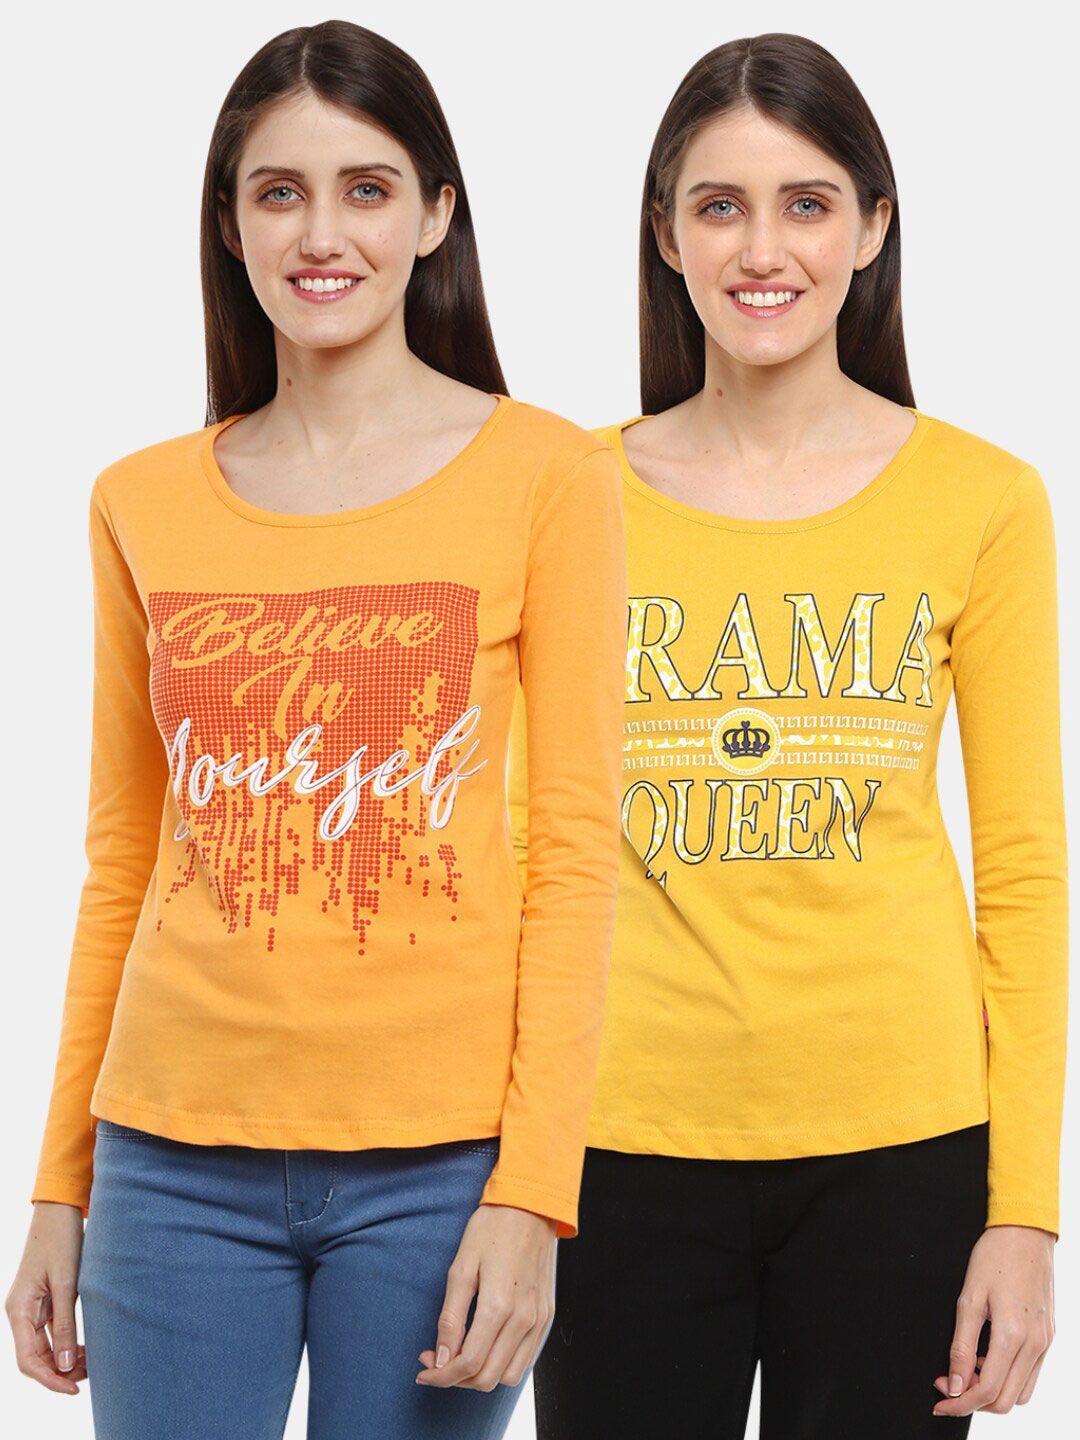 v-mart women western pack of 2 orange, yellow printed single jersey round neck top